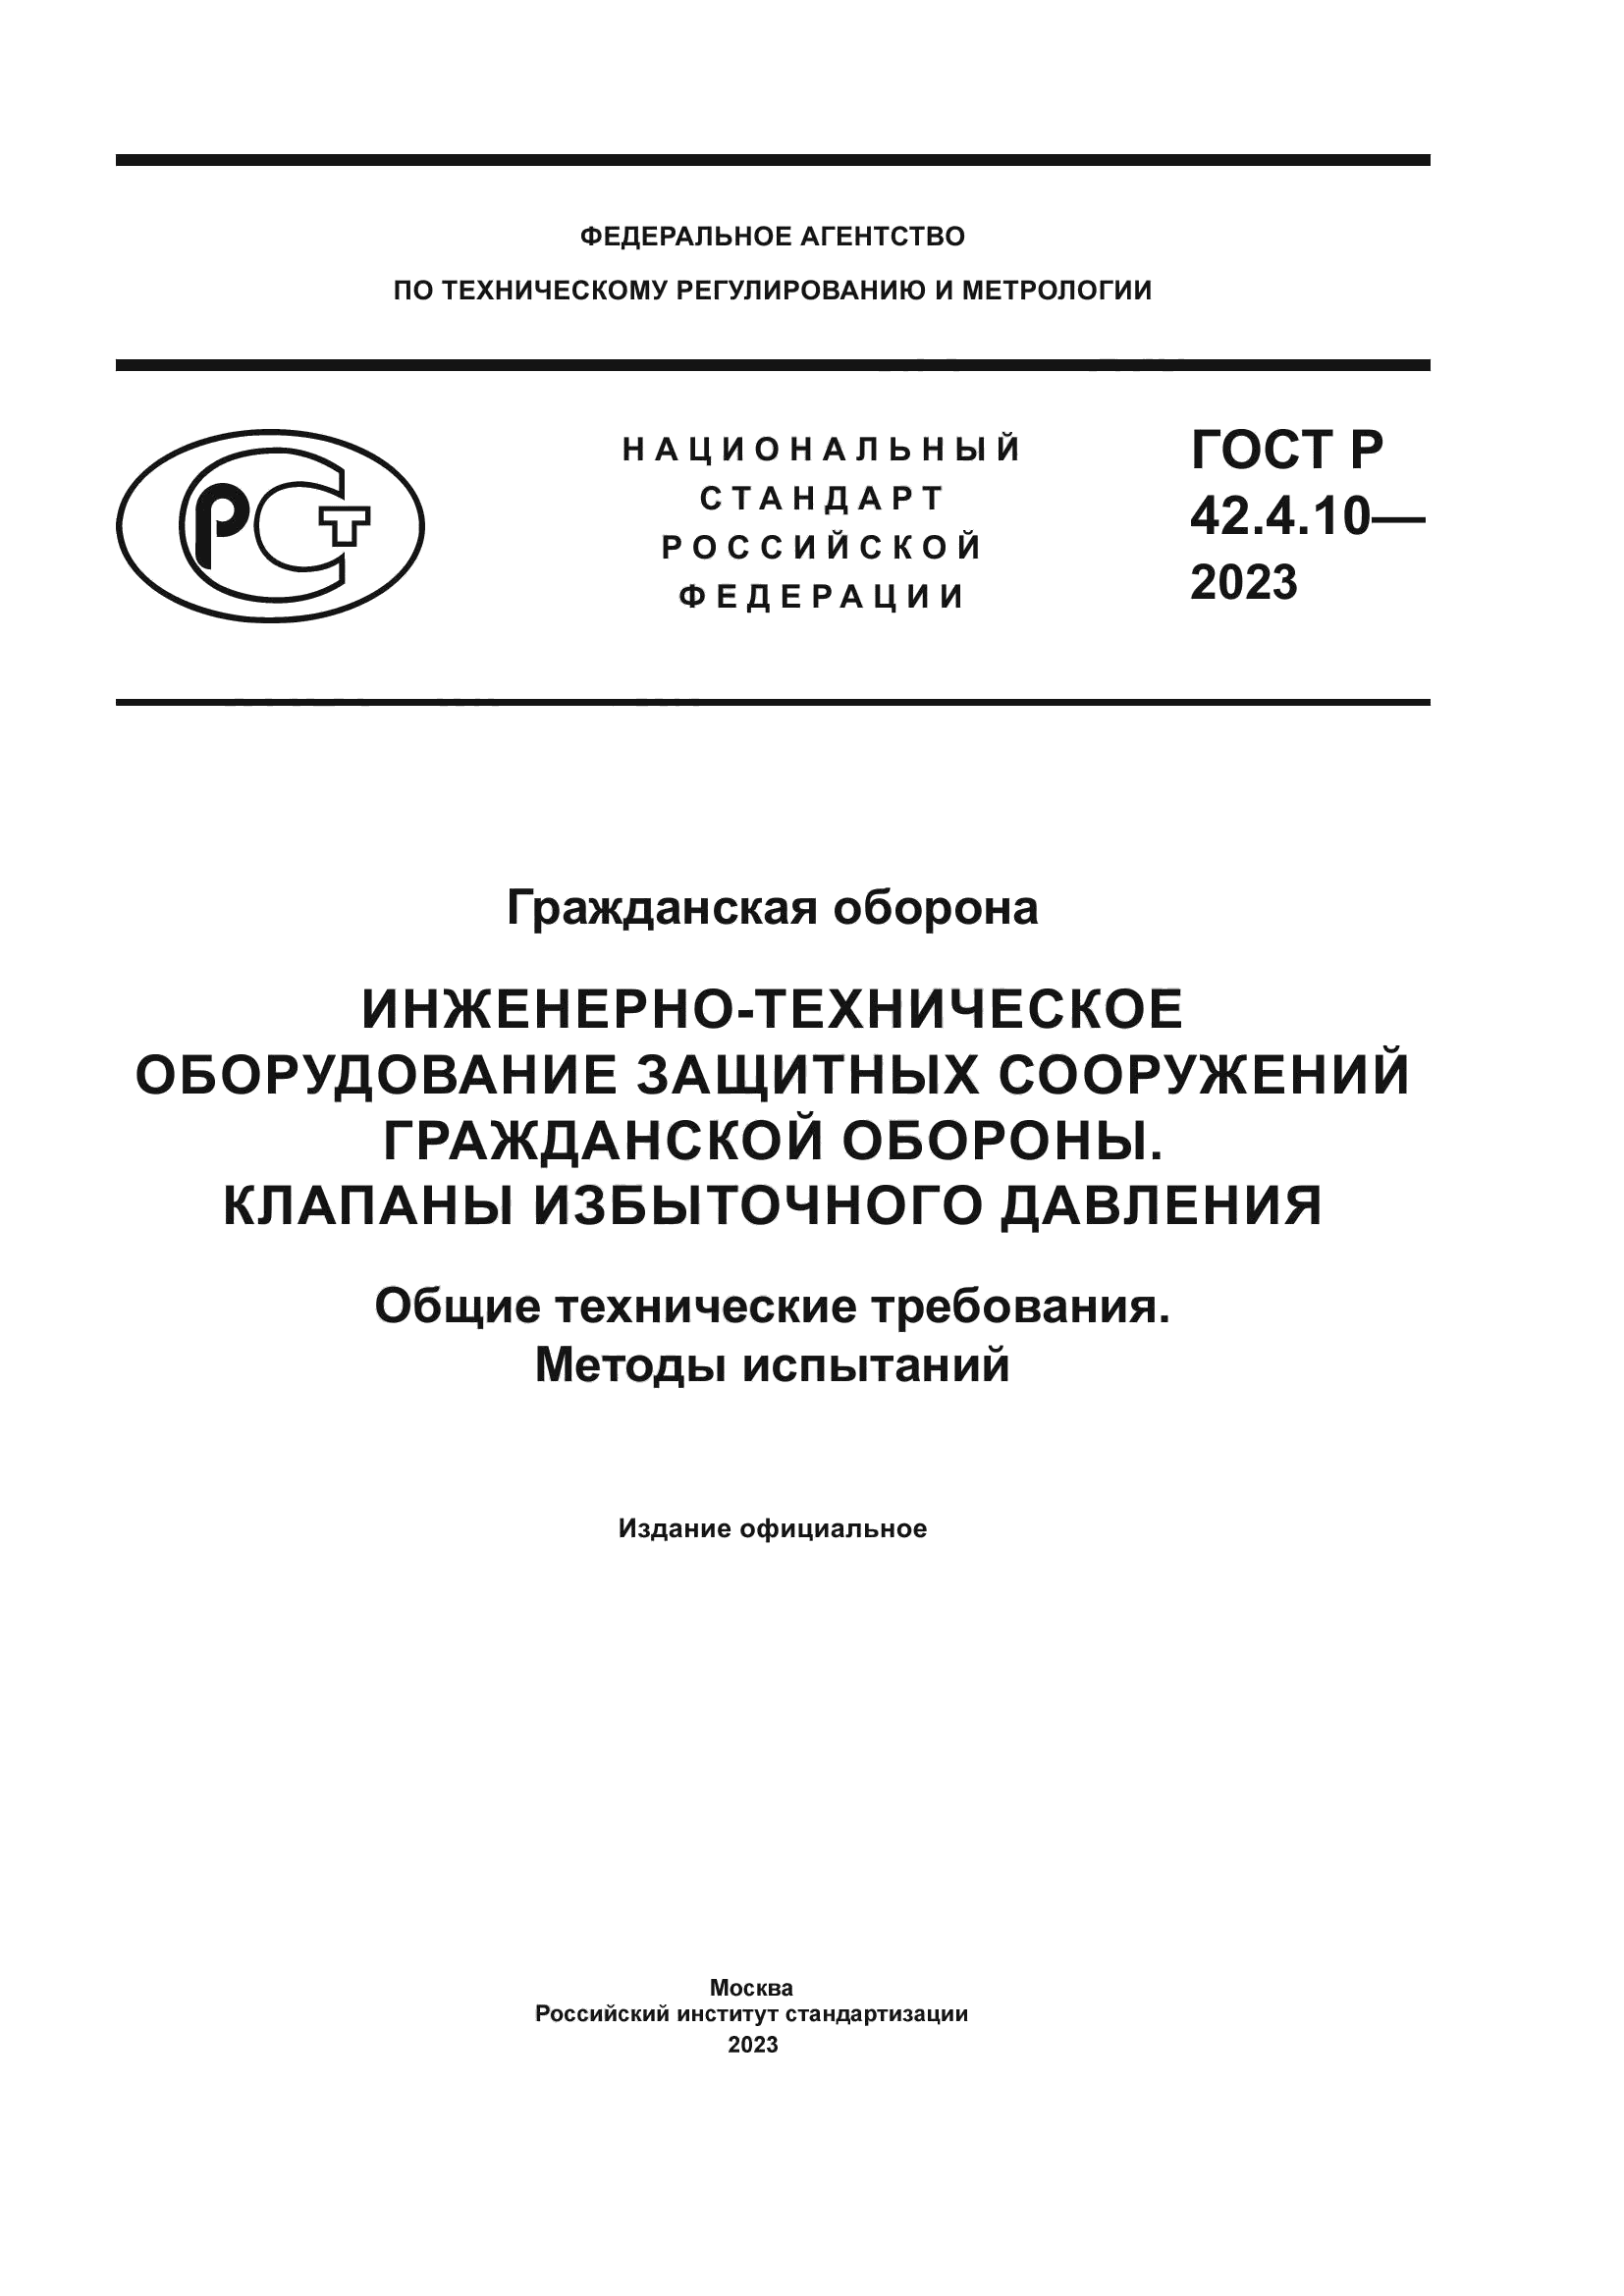 ГОСТ Р 42.4.10-2023